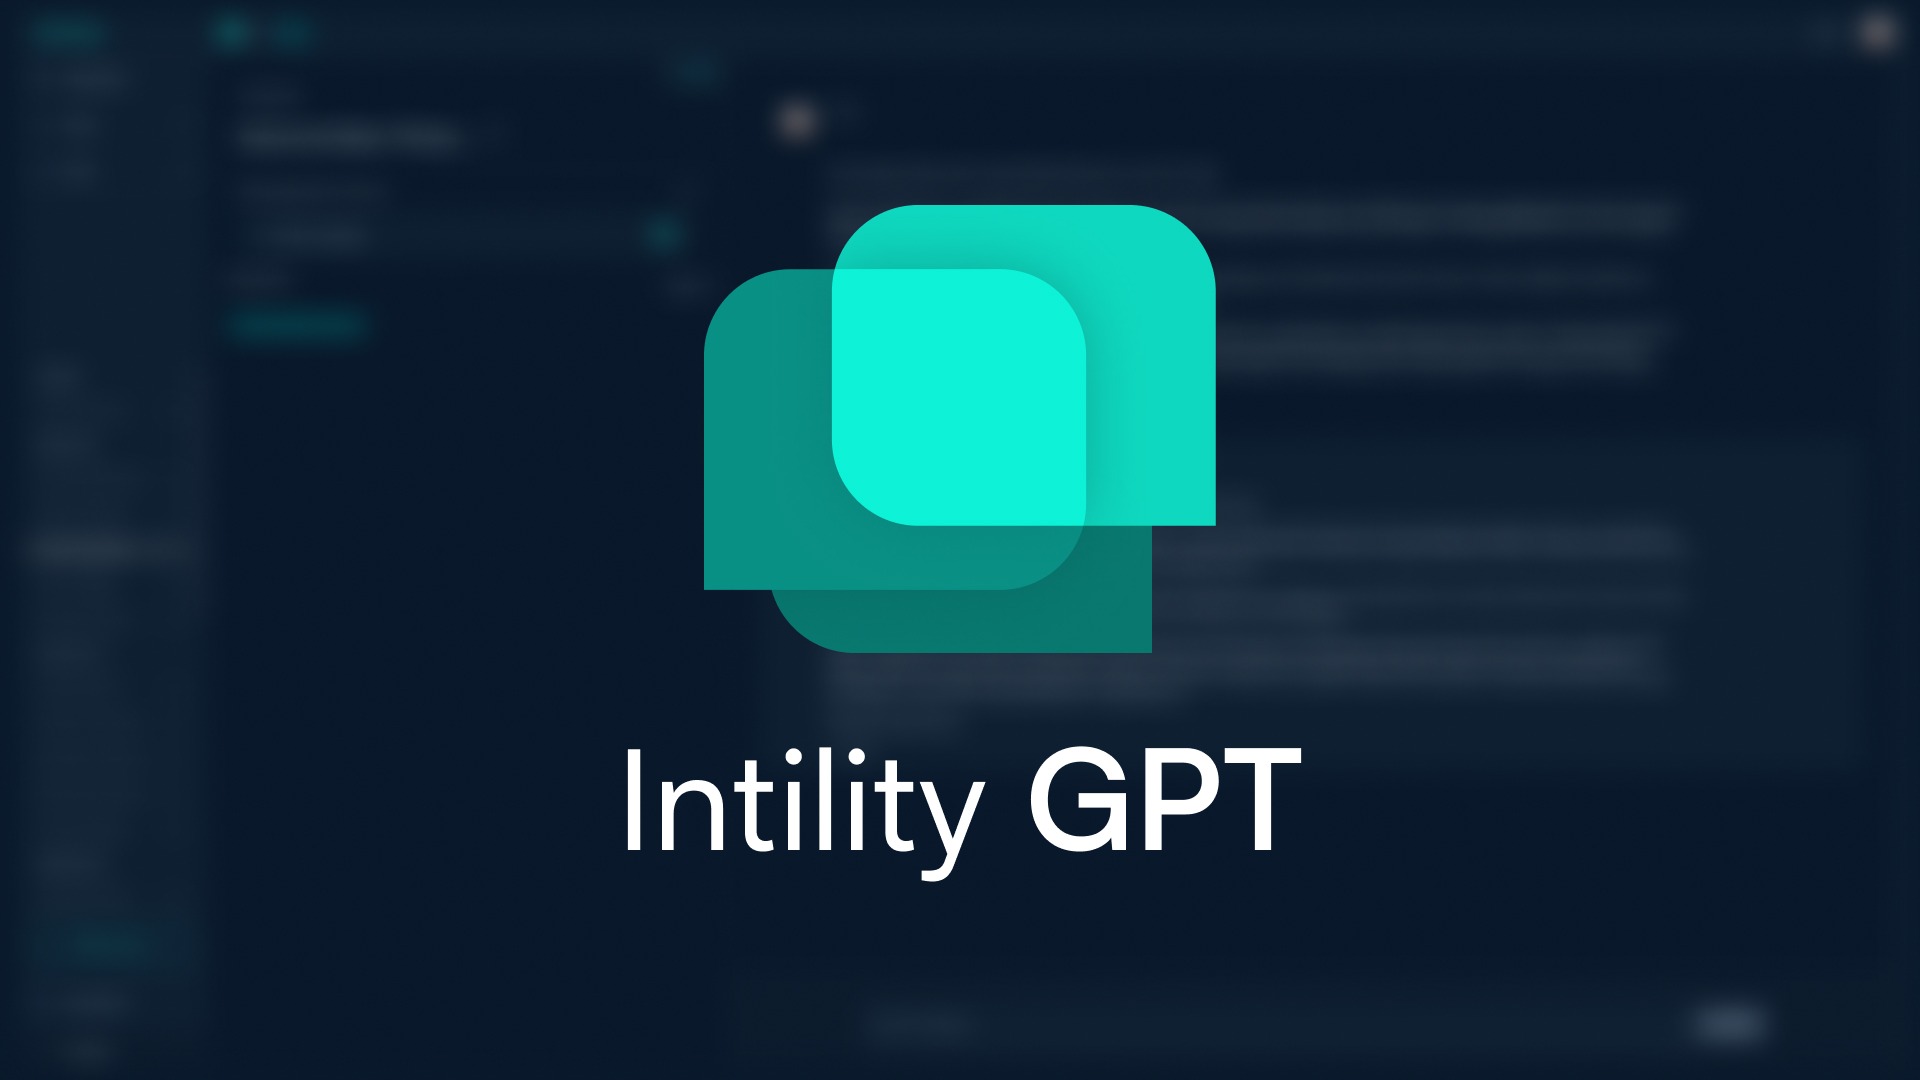 Intility GPT